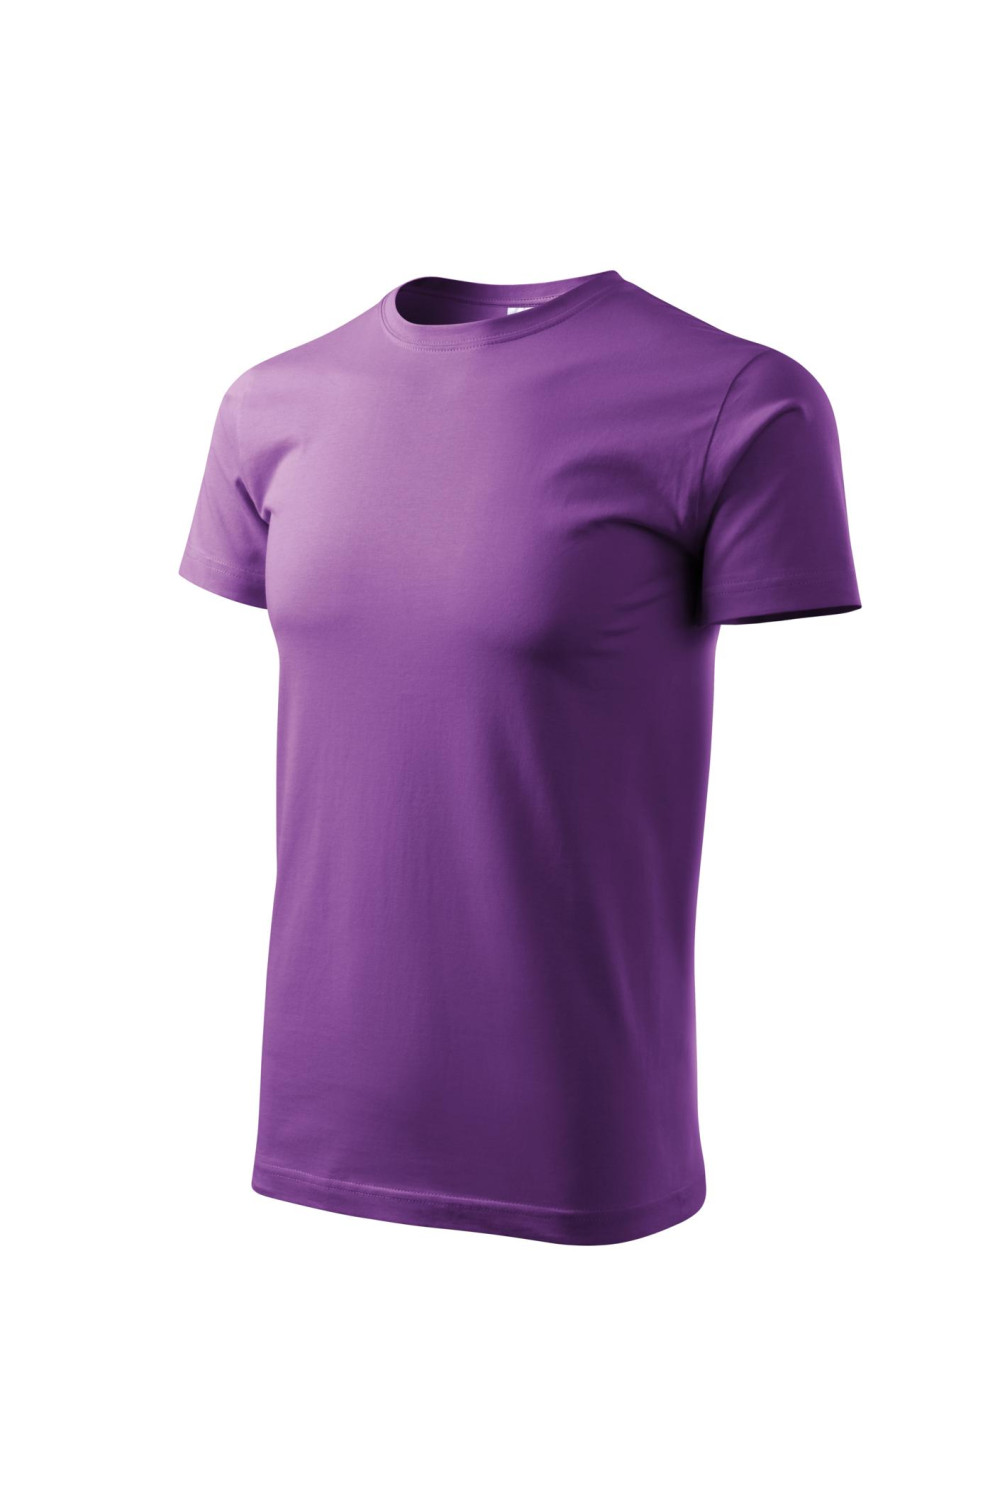 Koszulka męska 100% bawełna BASIC 129  kolor fioletowy